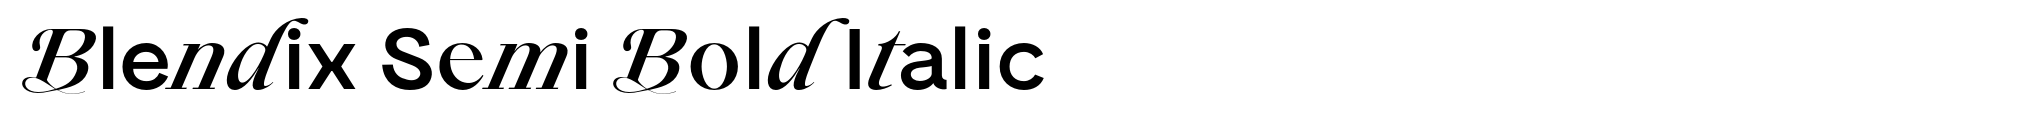 Blendix Semi Bold Italic image